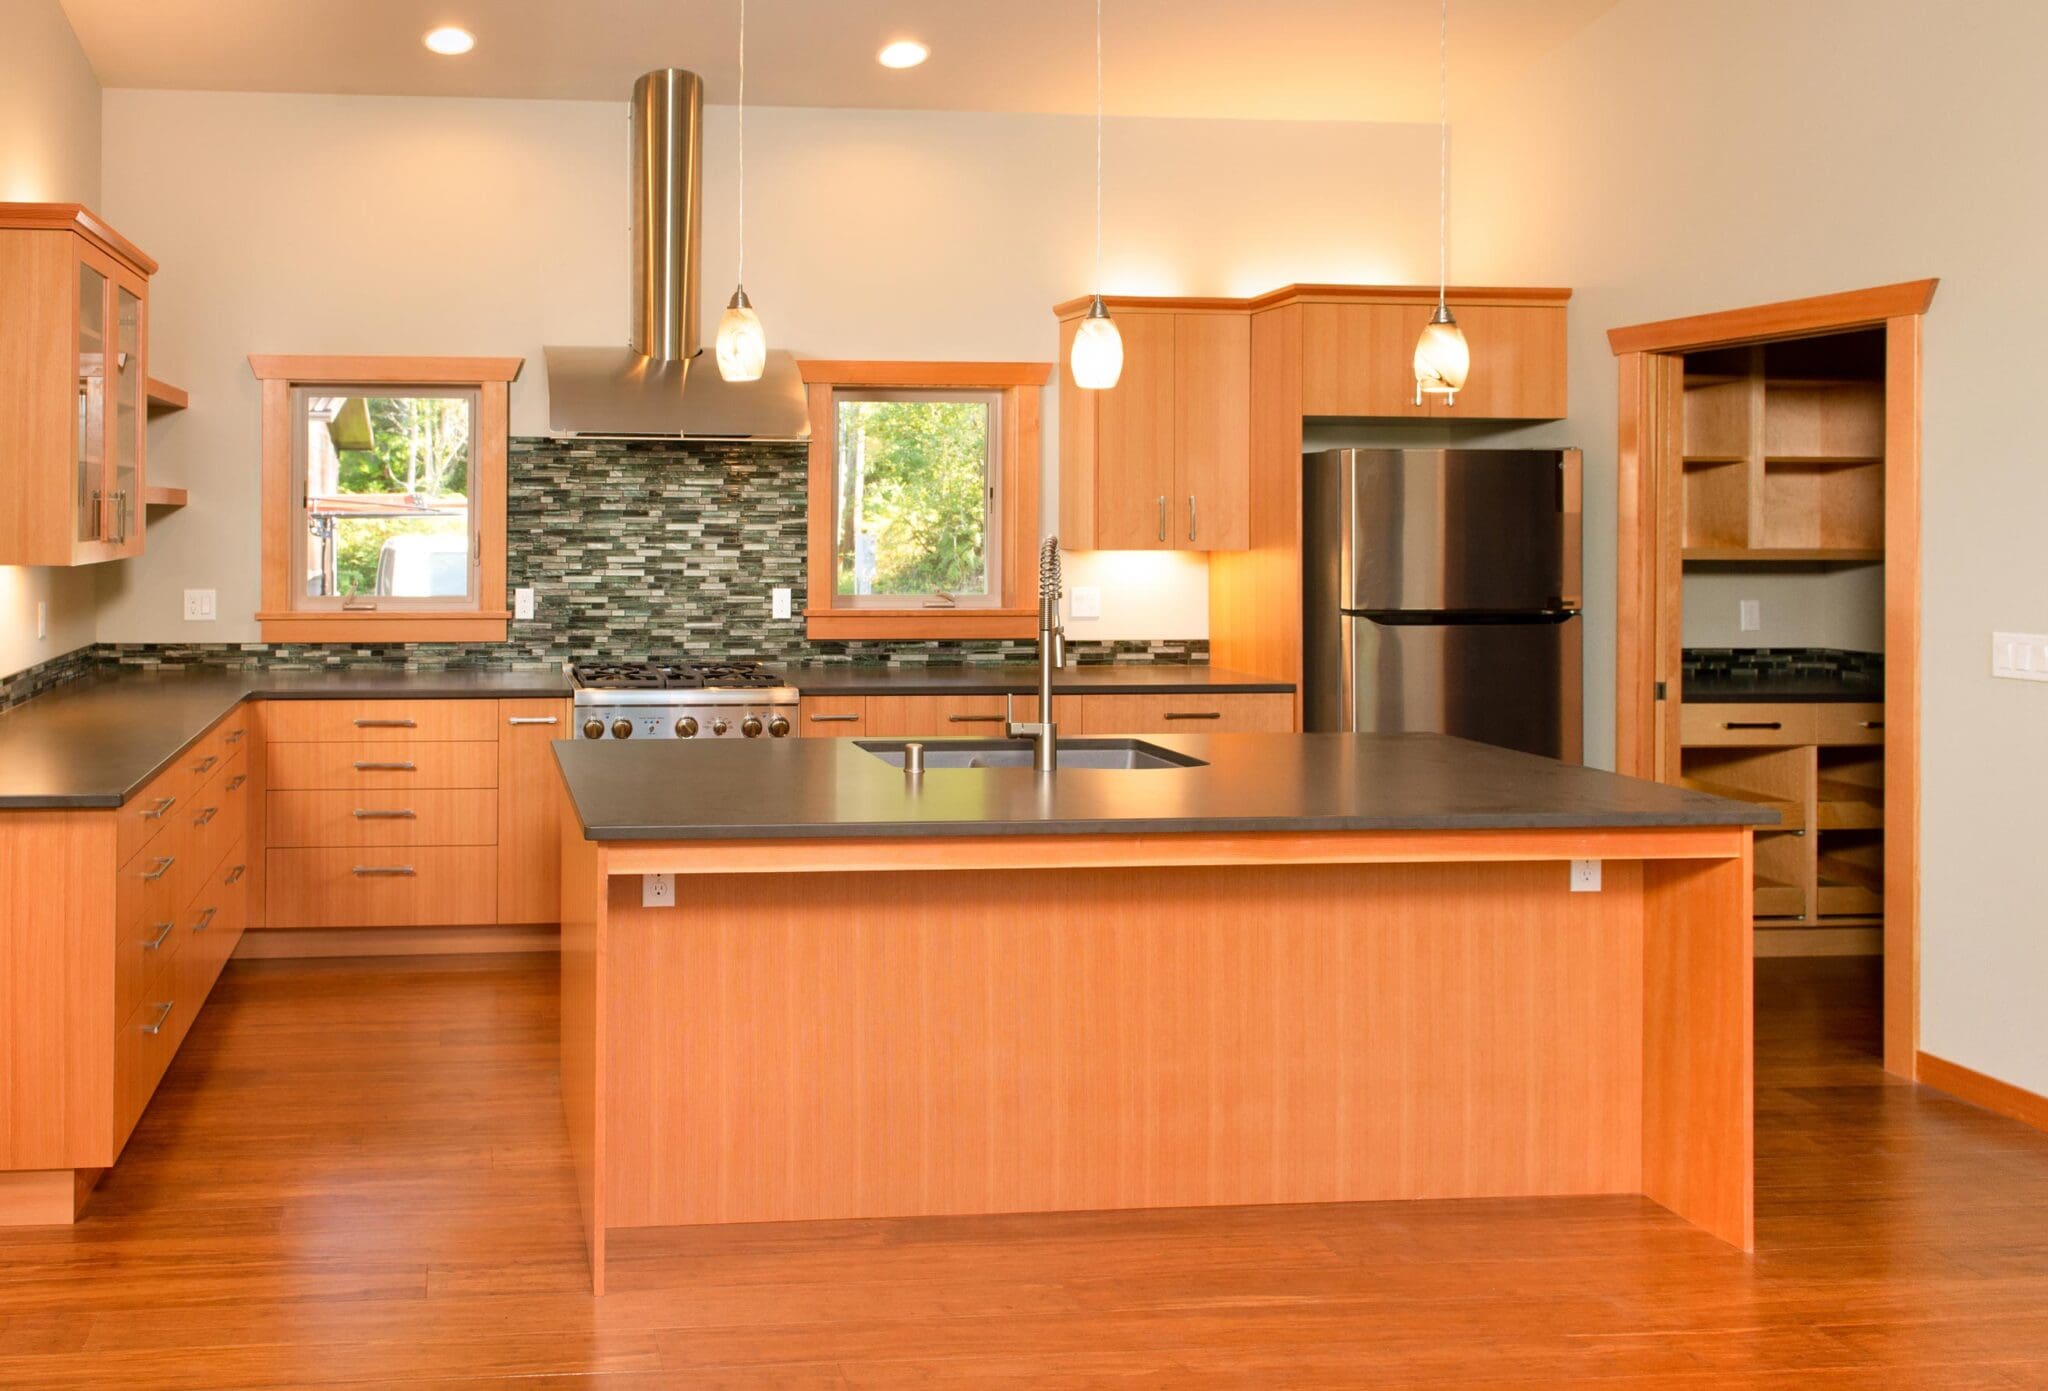 Kitchen - Wood Wrap - Cabinetry - Matte Quartz - Glass Tile Backsplash - Engineered Bamboo Floor